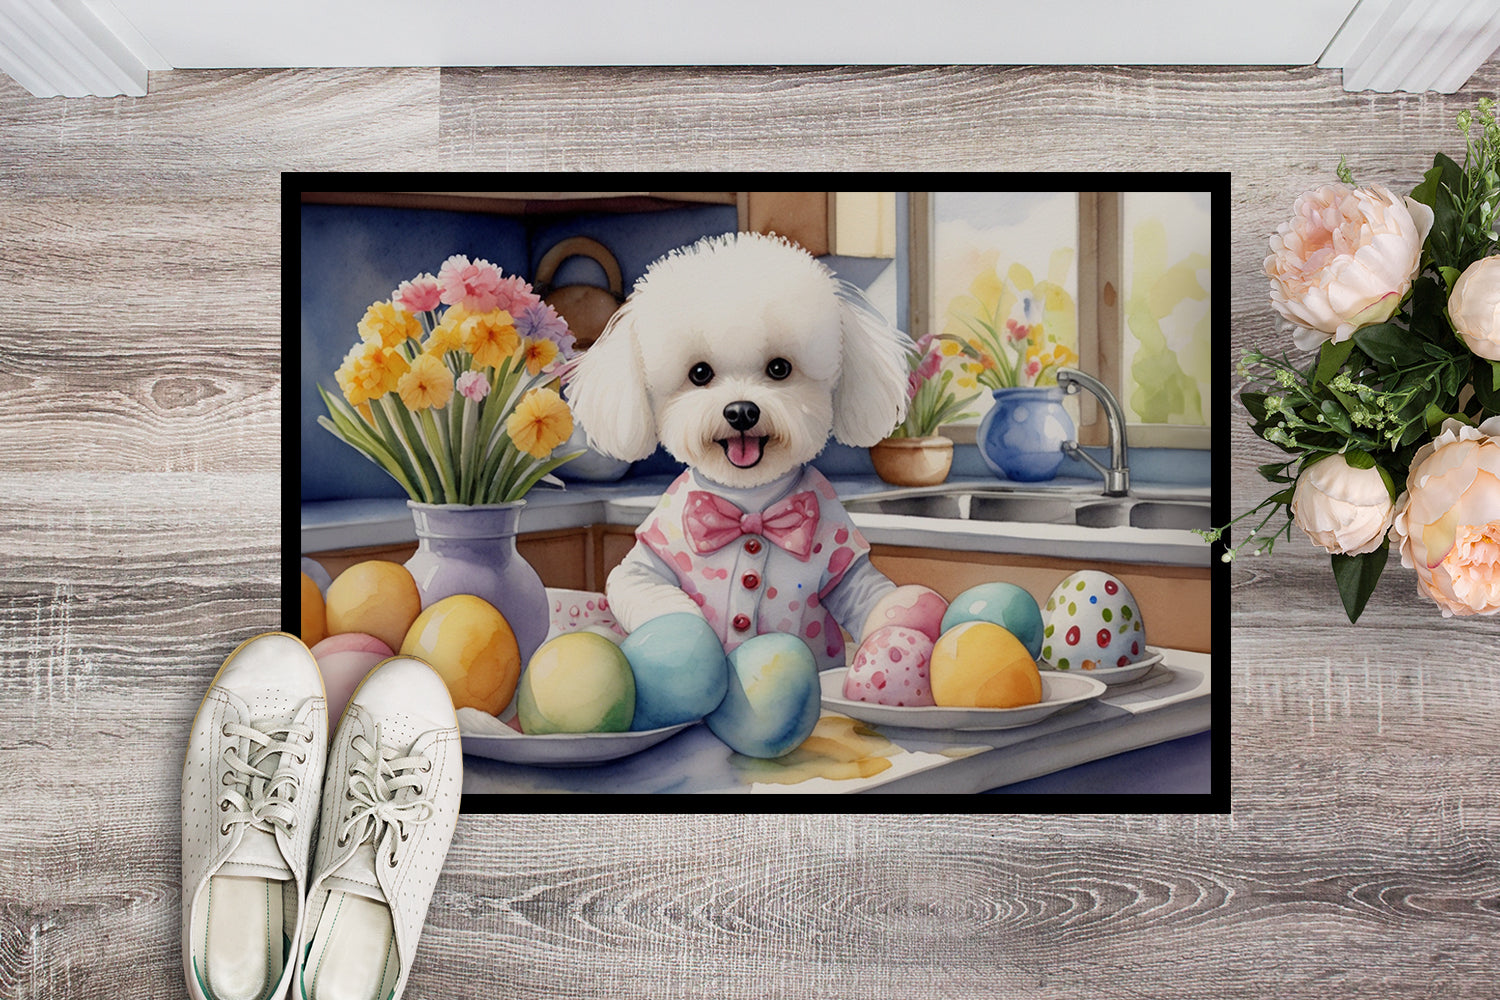 Buy this Decorating Easter Bichon Frise Doormat